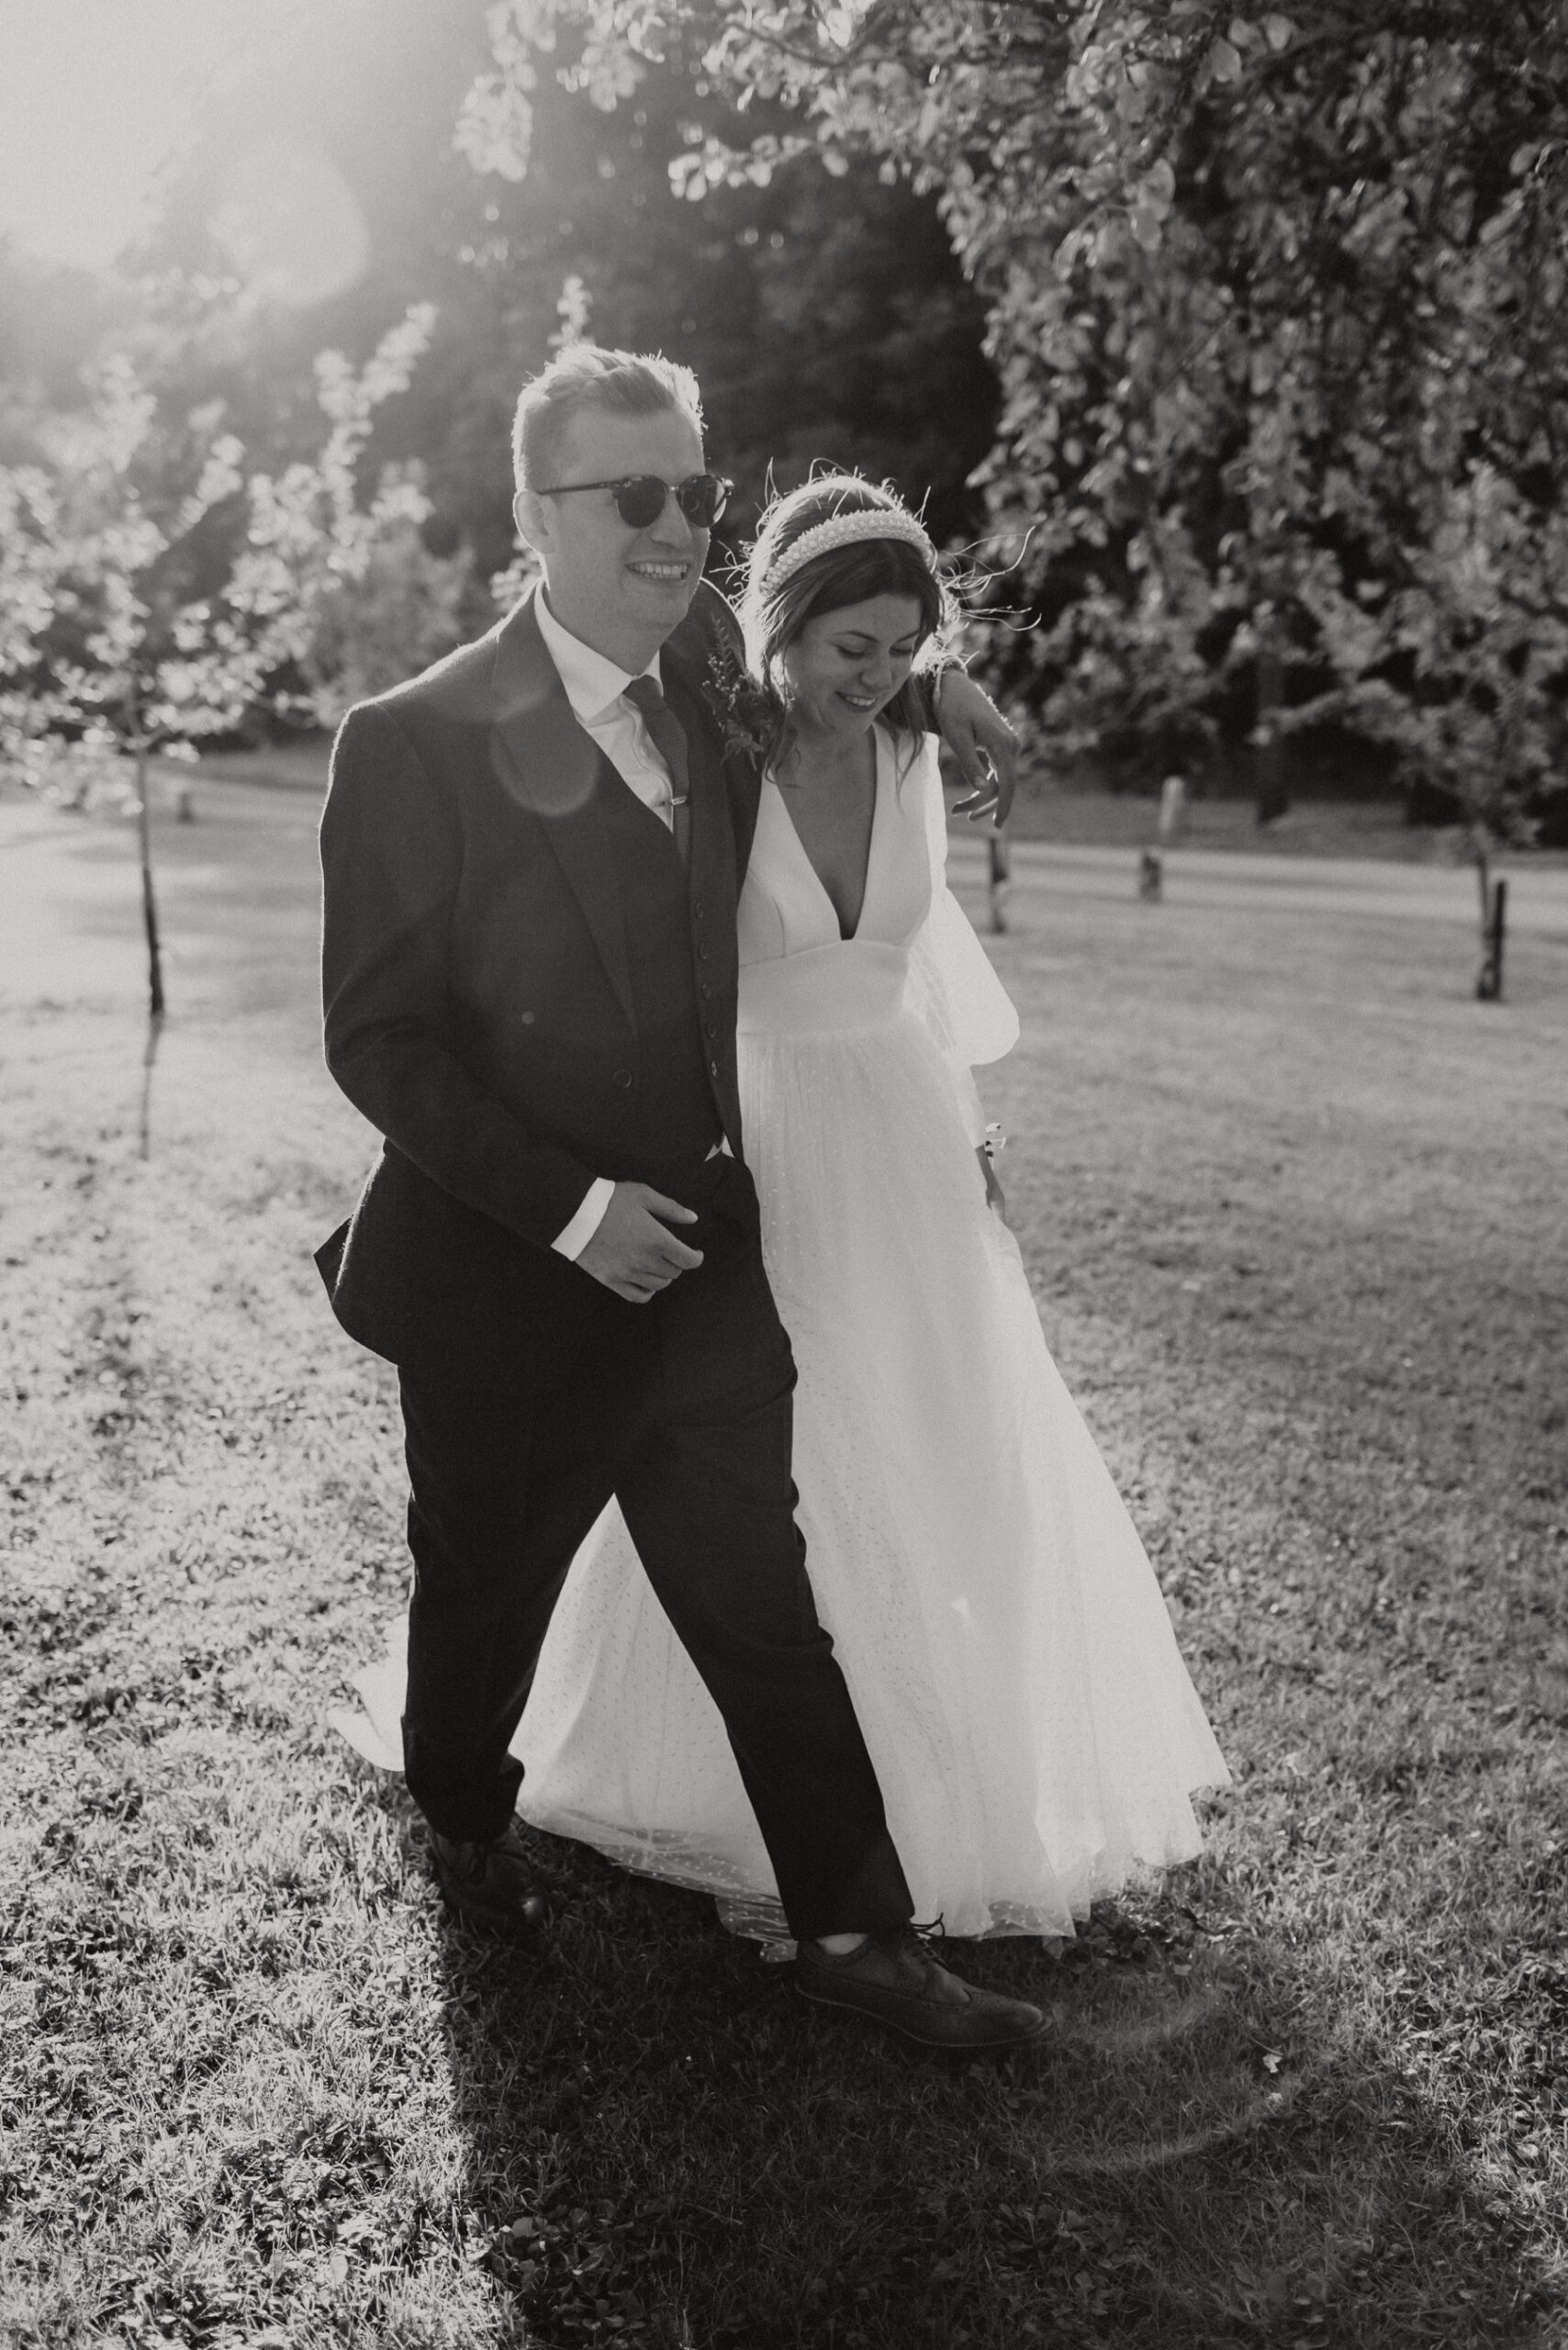 Black and white wedding photography - monochrome